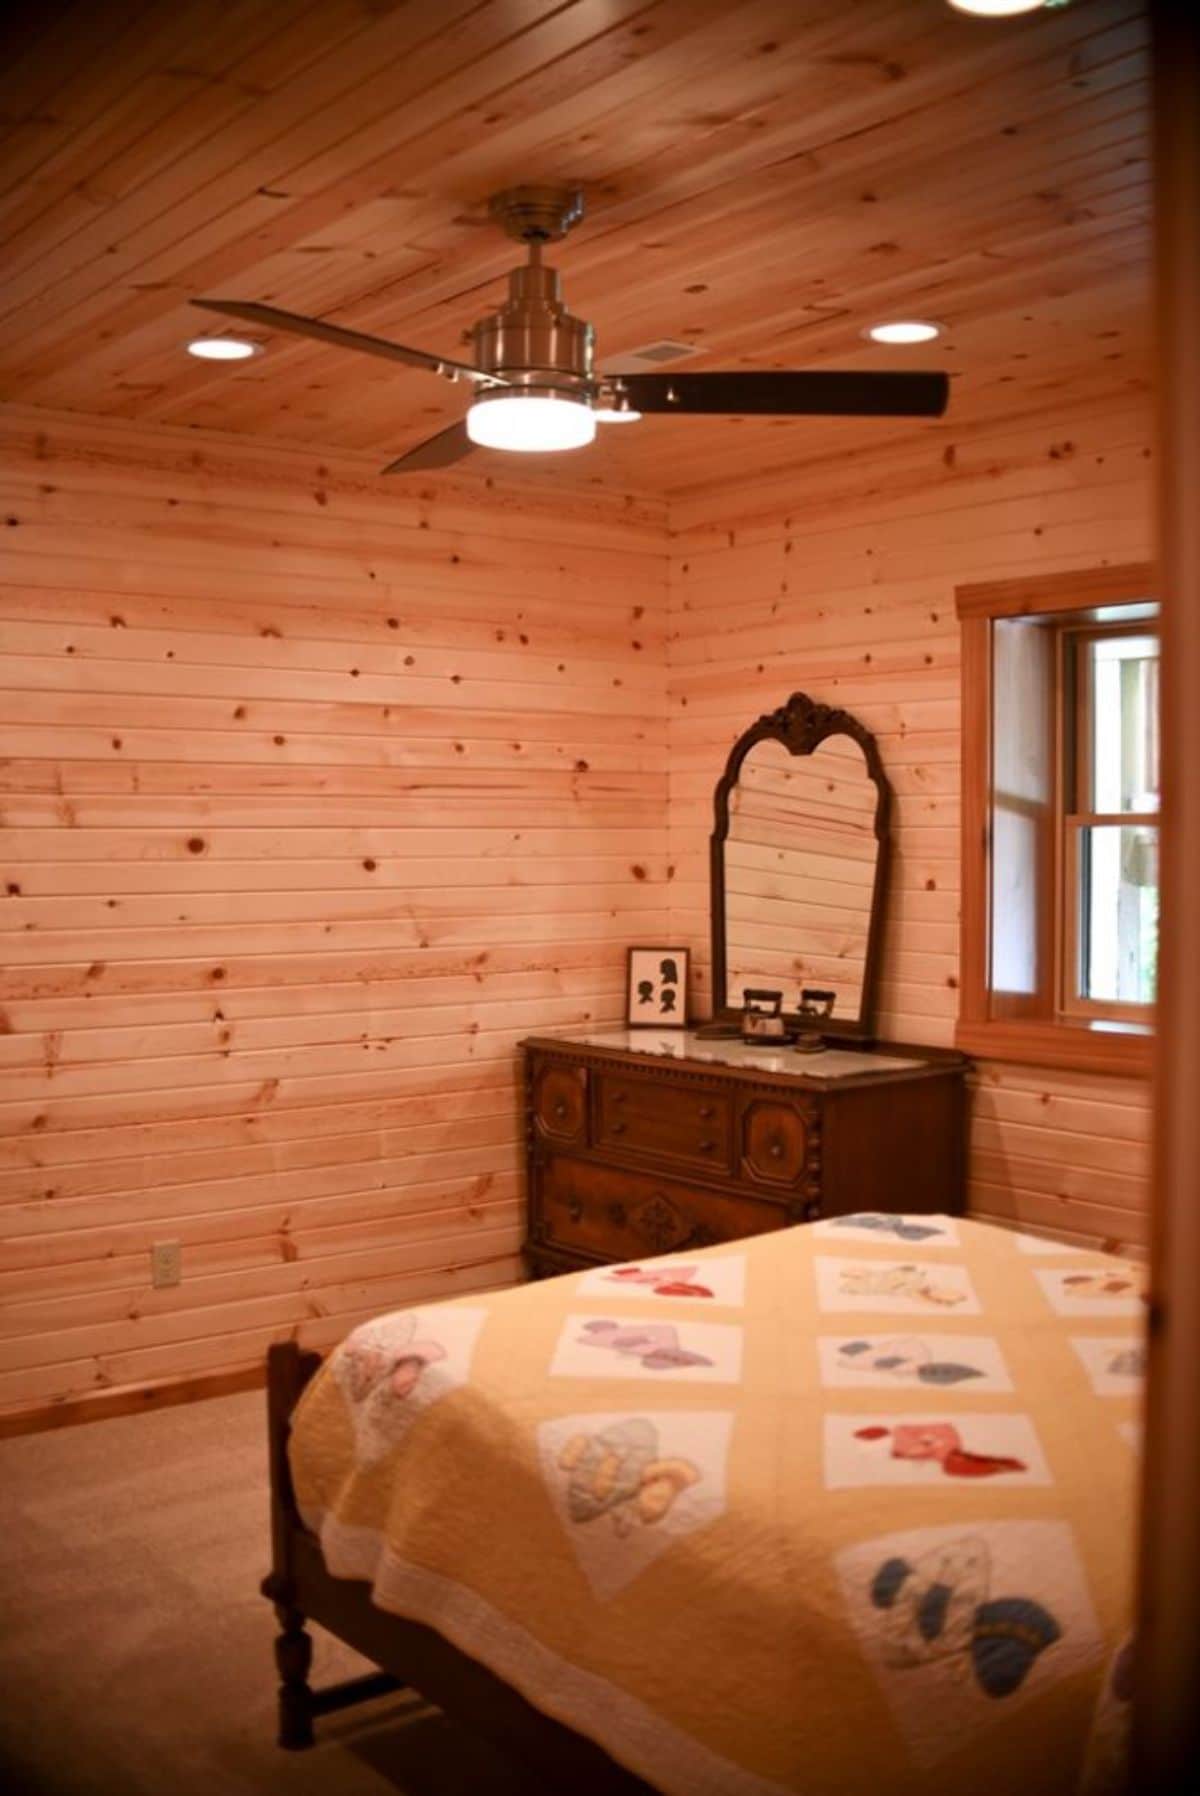 bed on right with dresser in back left corner of log cabin